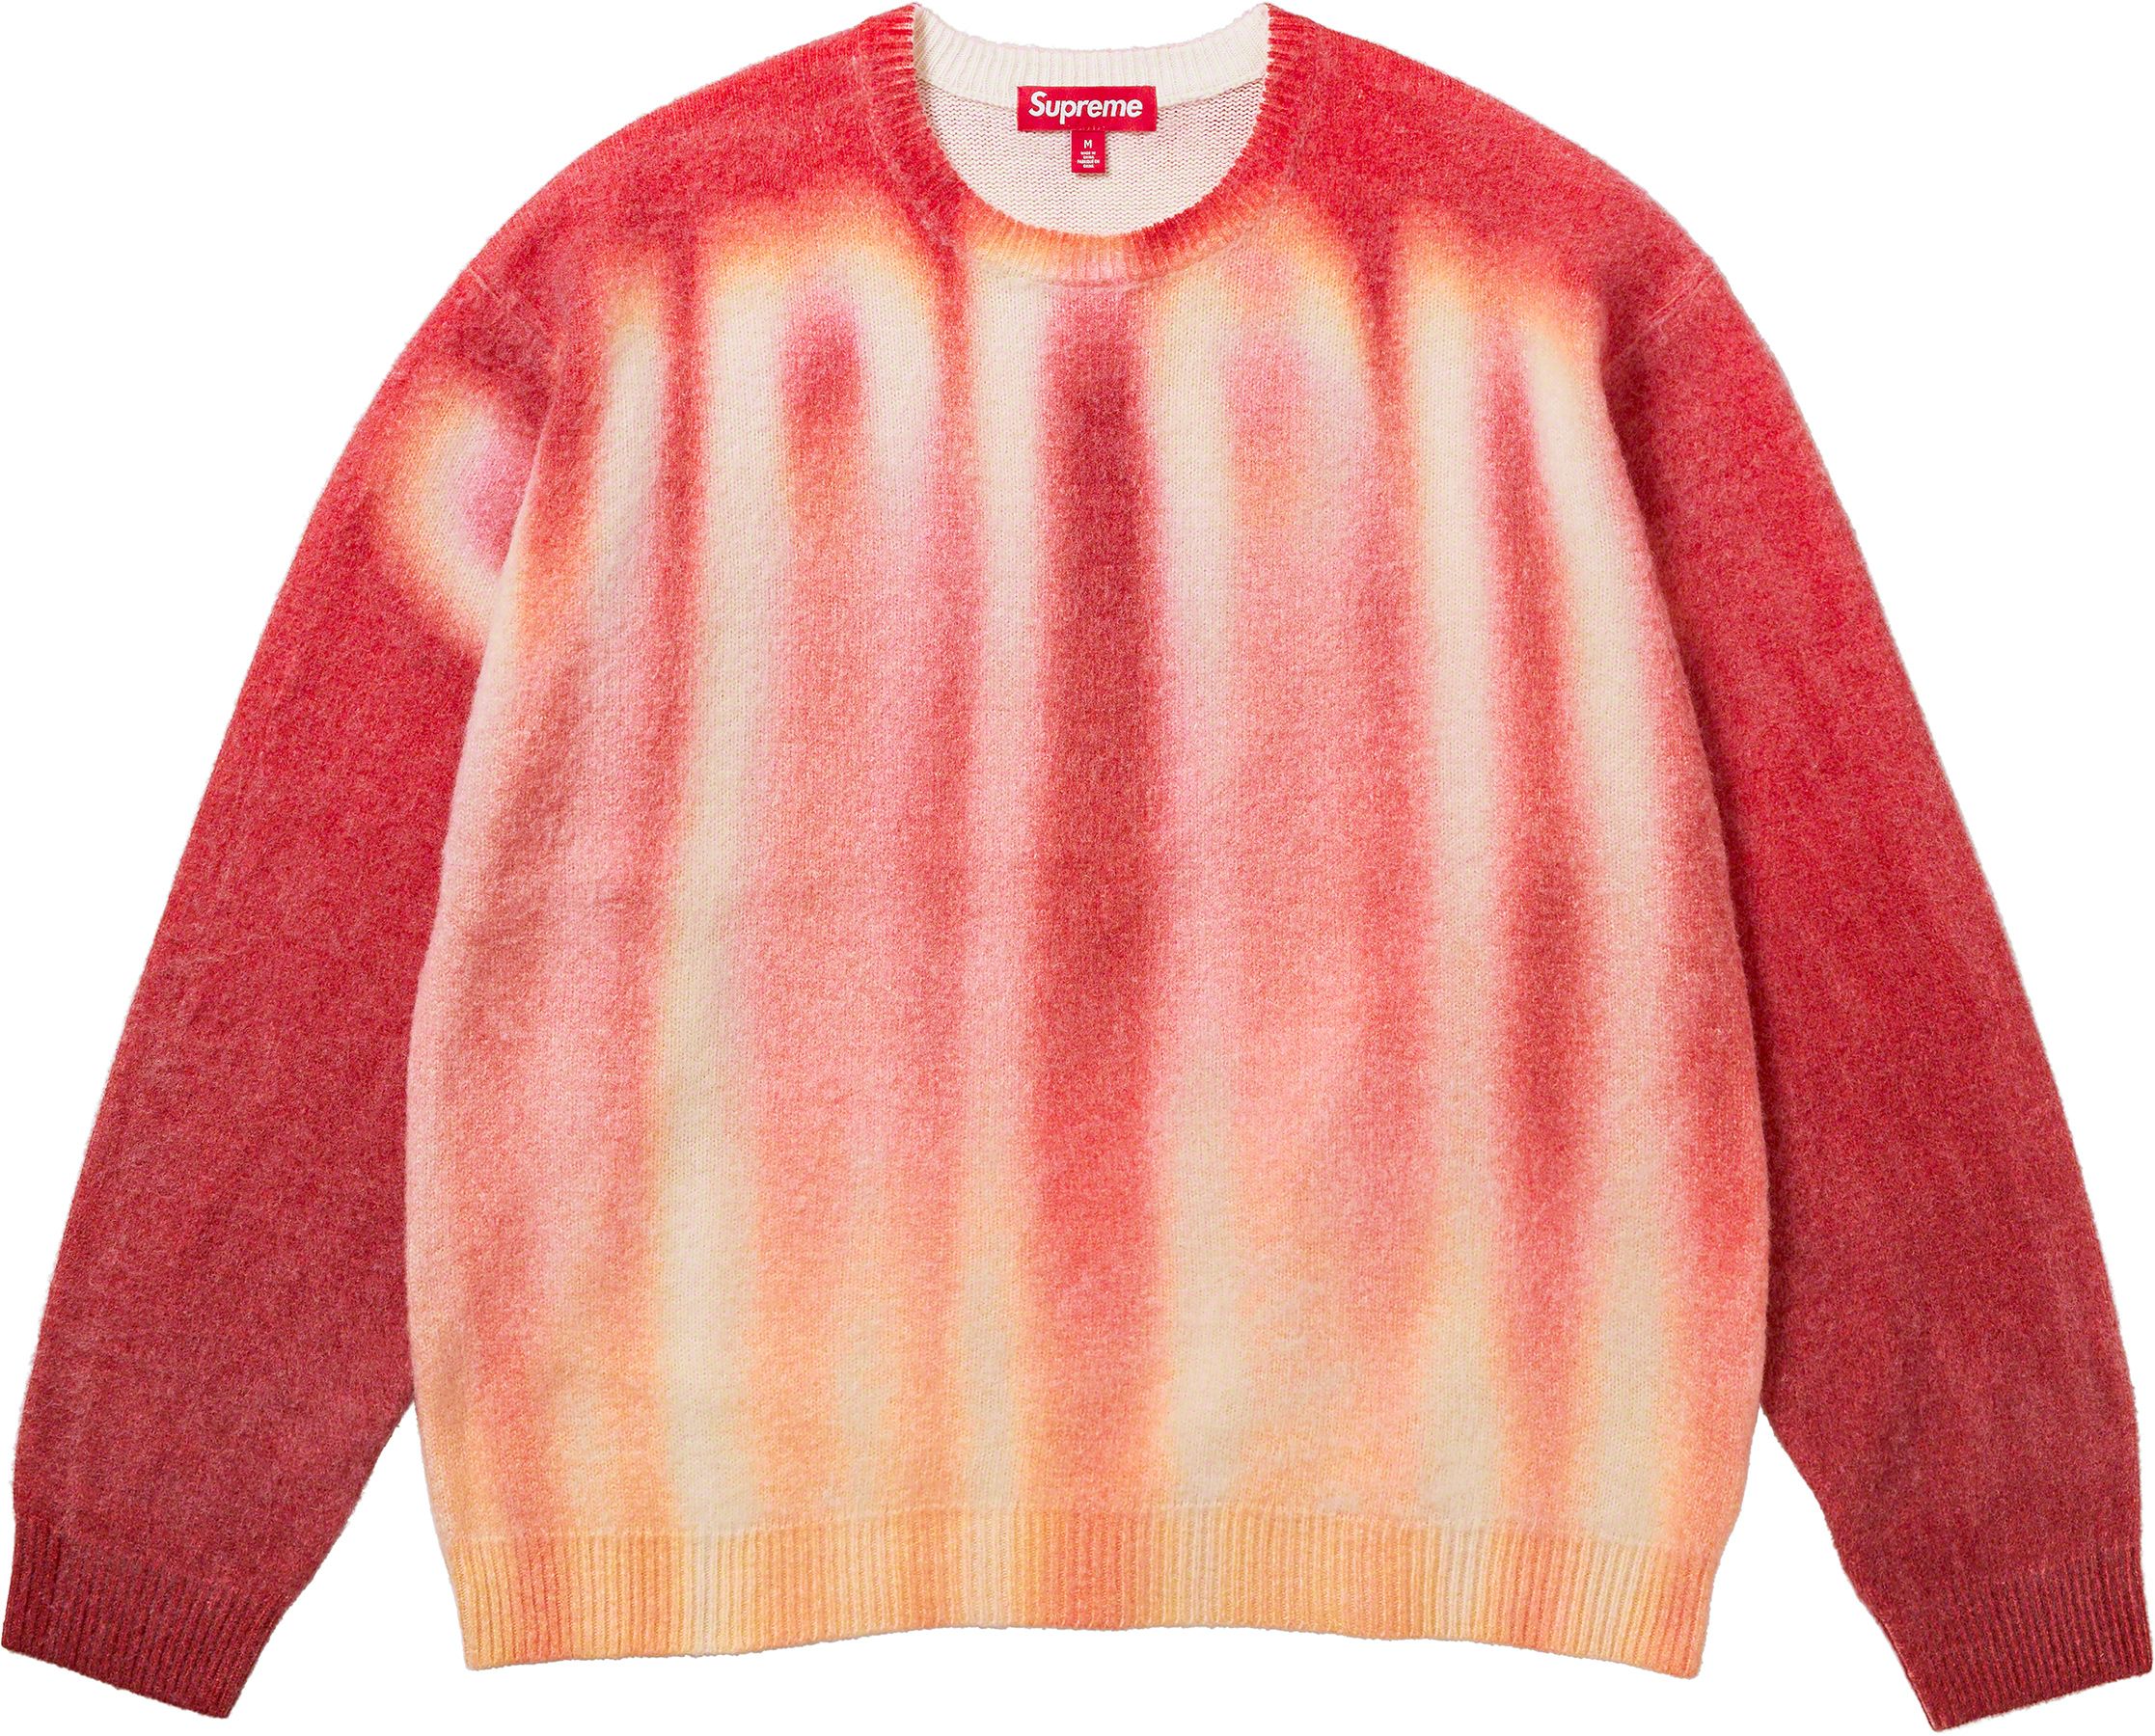 XXLサイズ supreme blurred logo セーター 赤ファッション - トップス